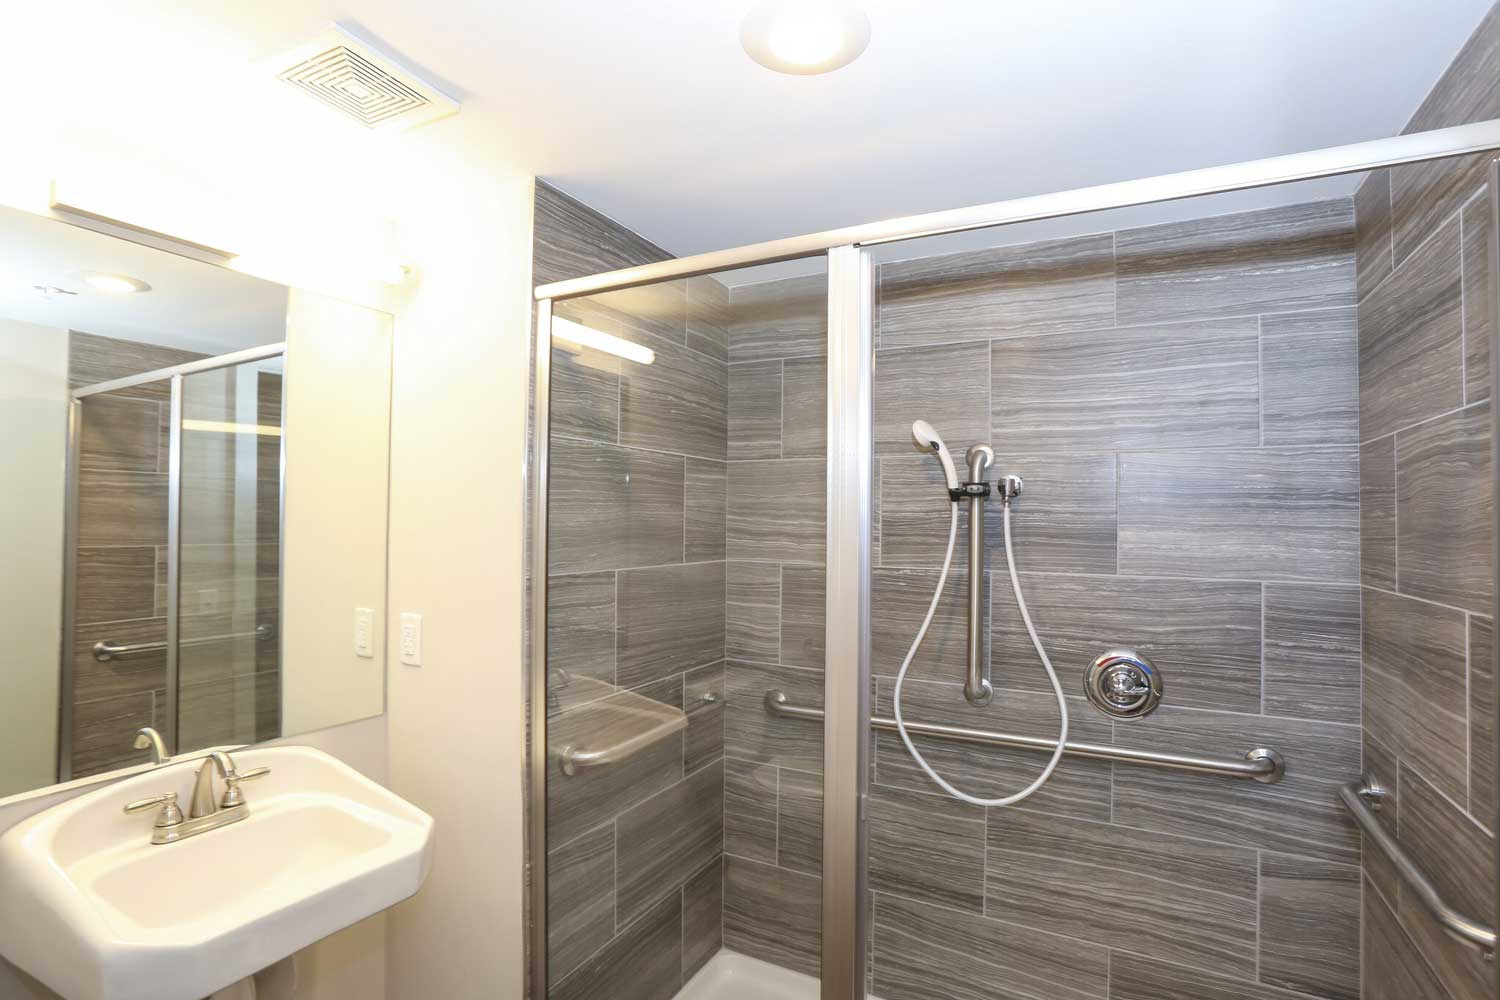 Tiled Shower Room in OGGI Lofts Apartments at Kansas City